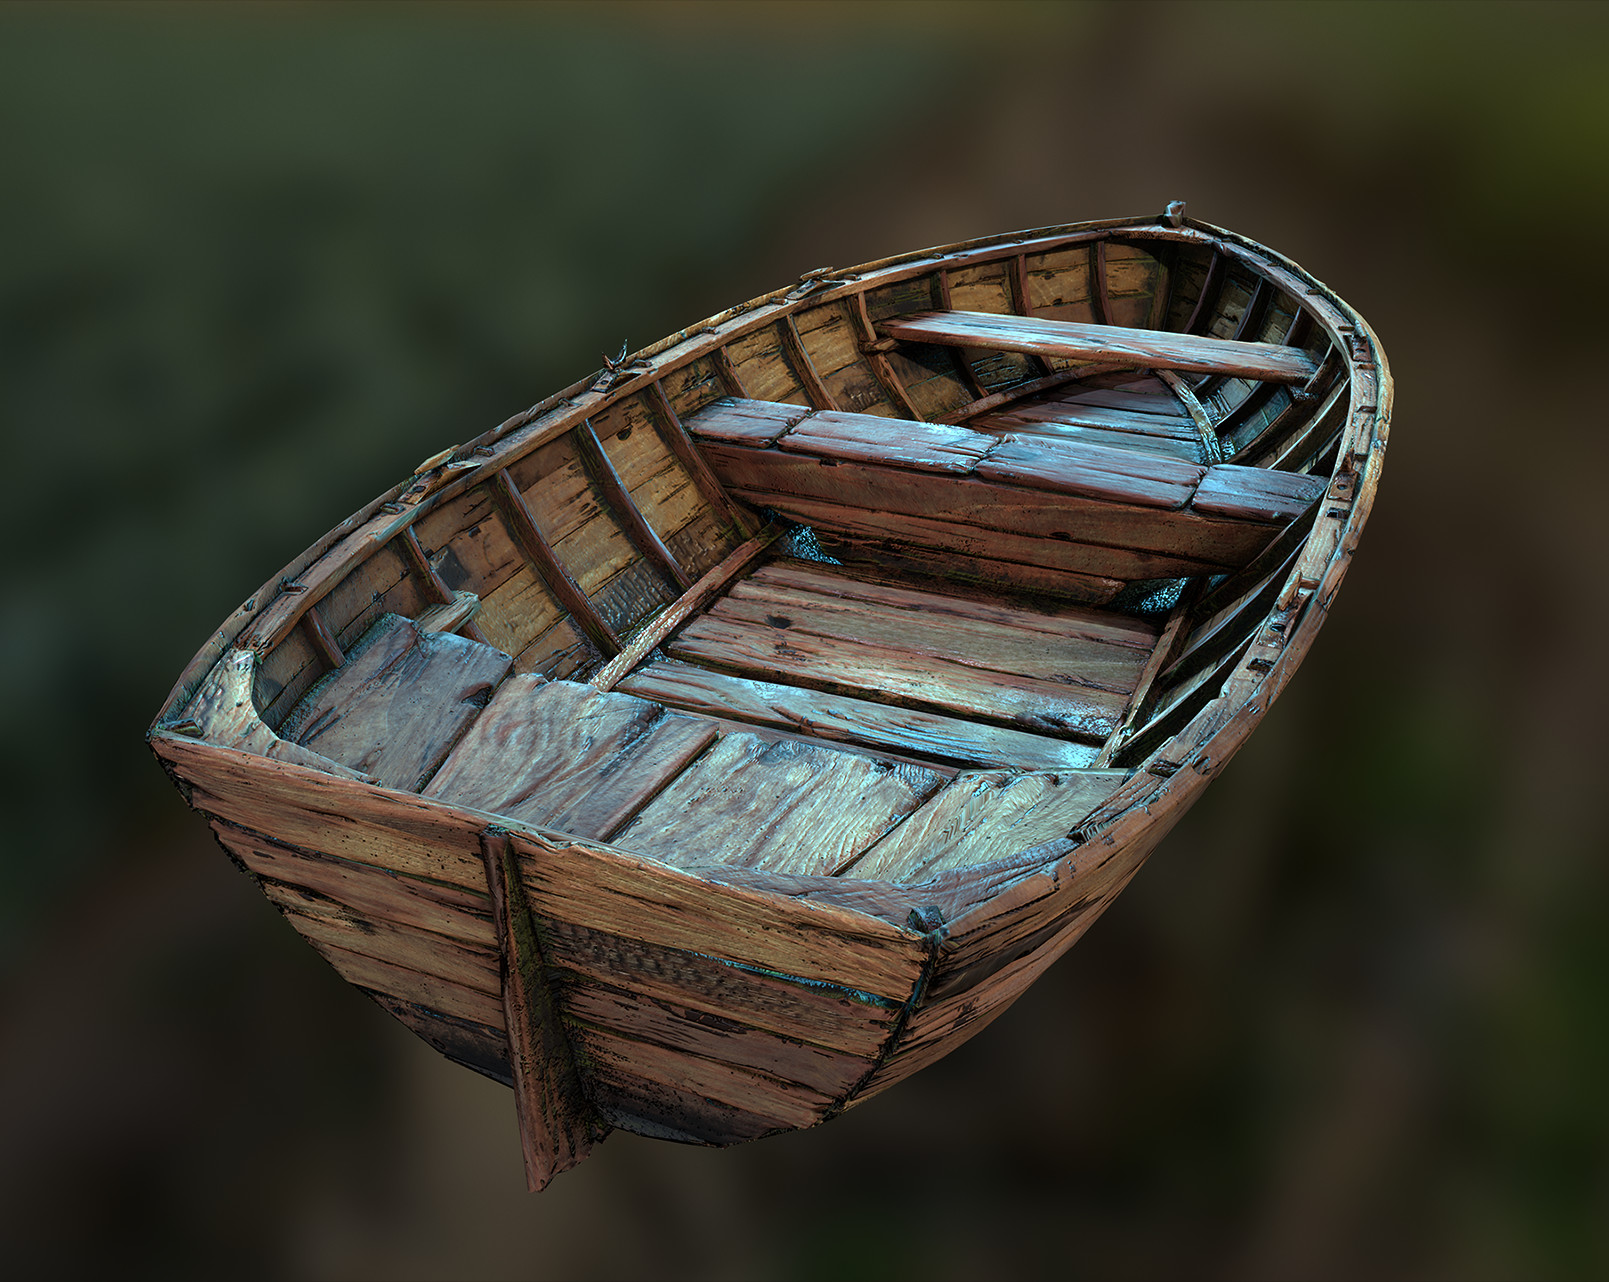 Wooden Boat 3d Model Free Download